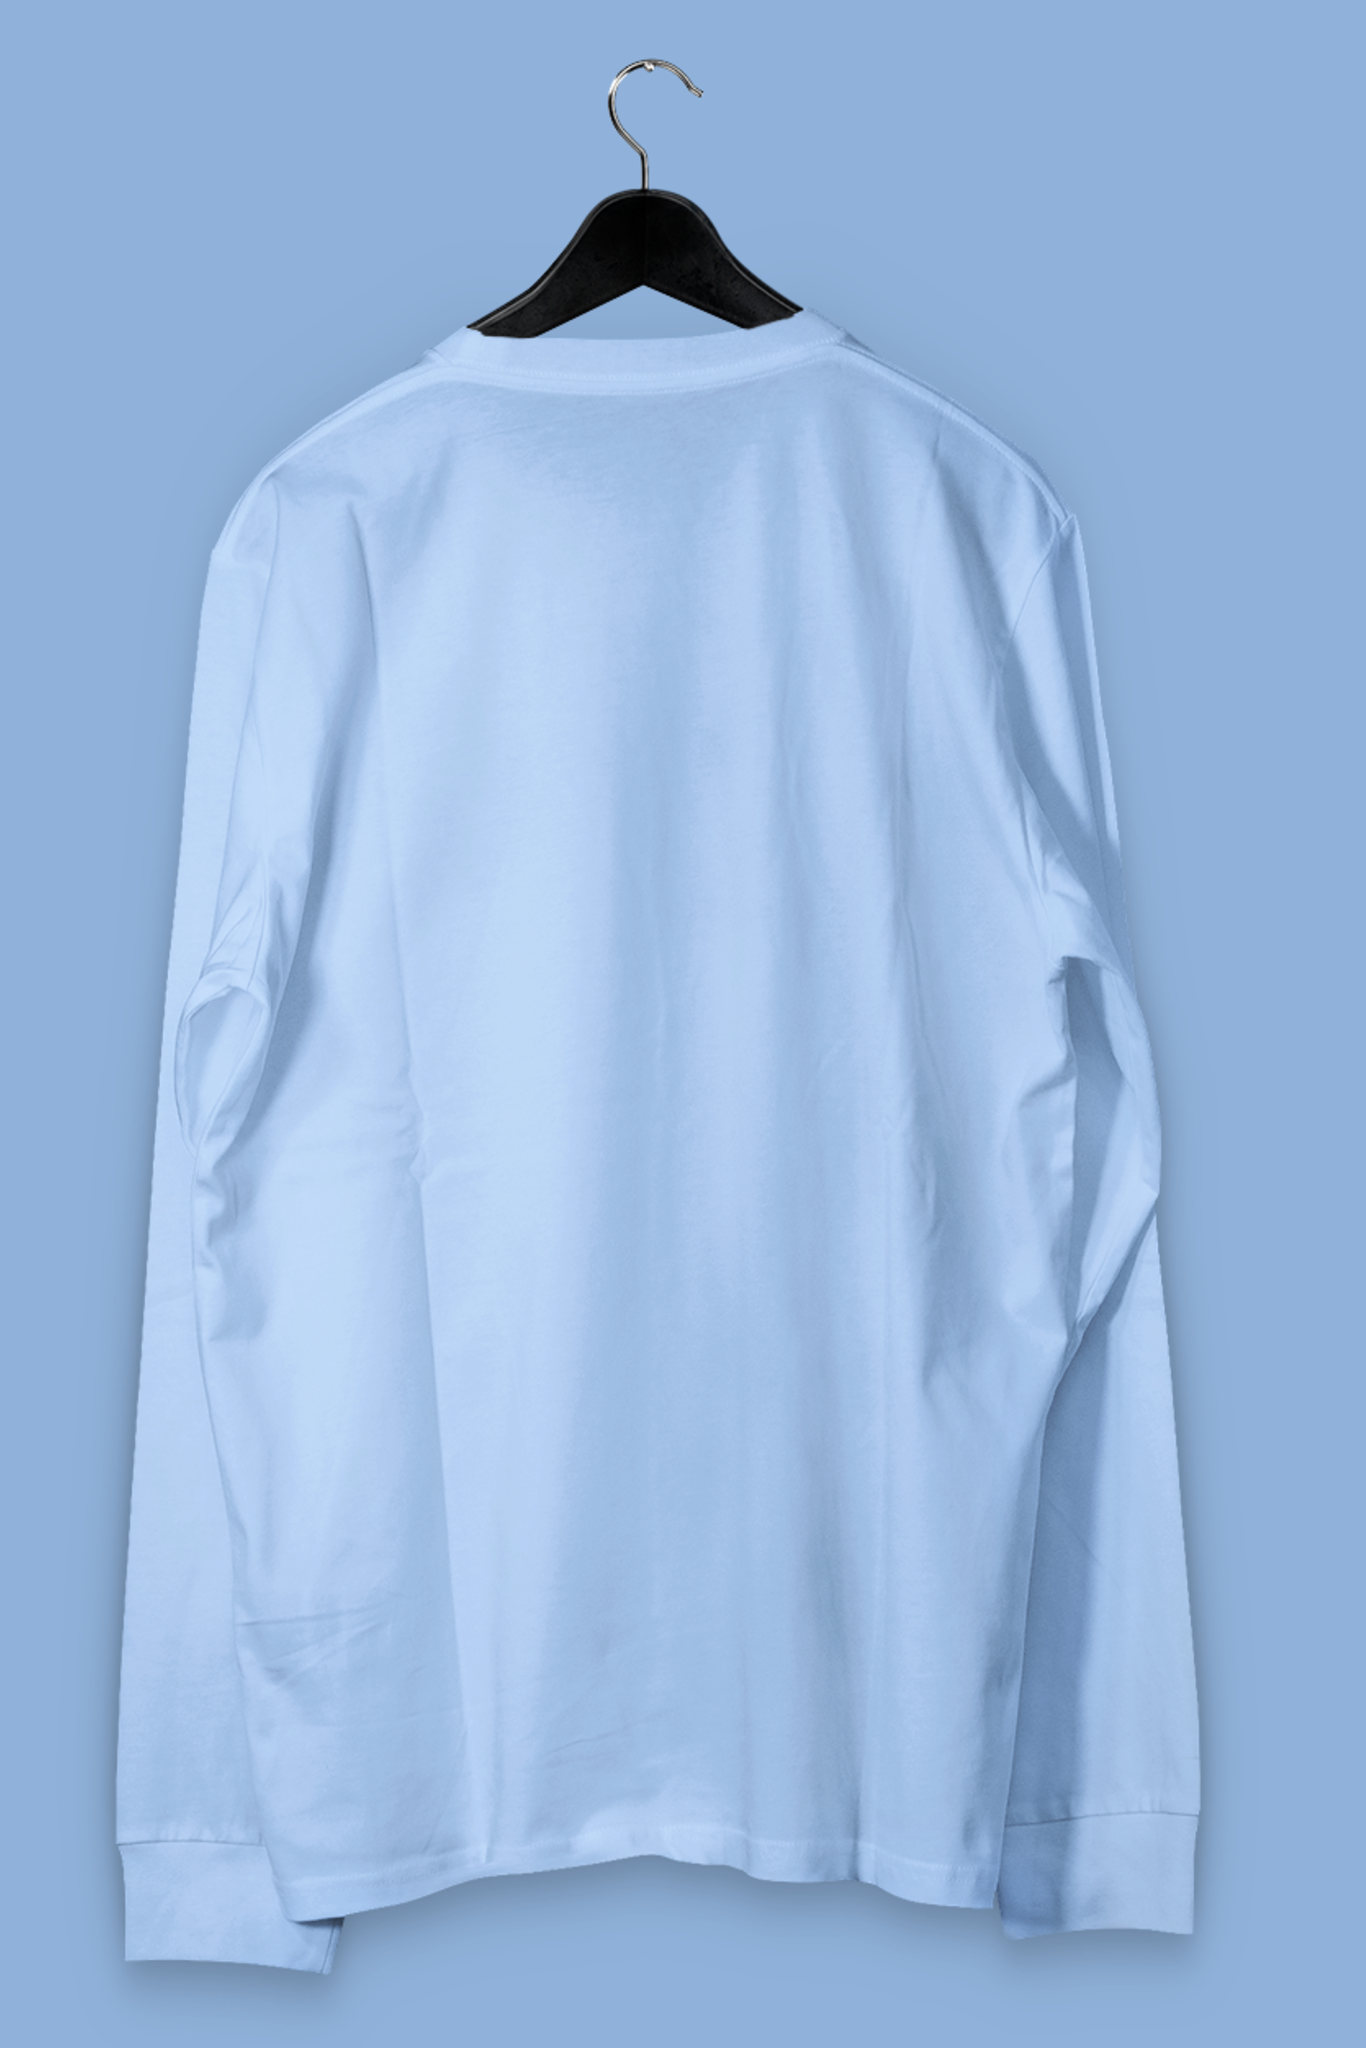 Unisex Sweatshirt: Aqua